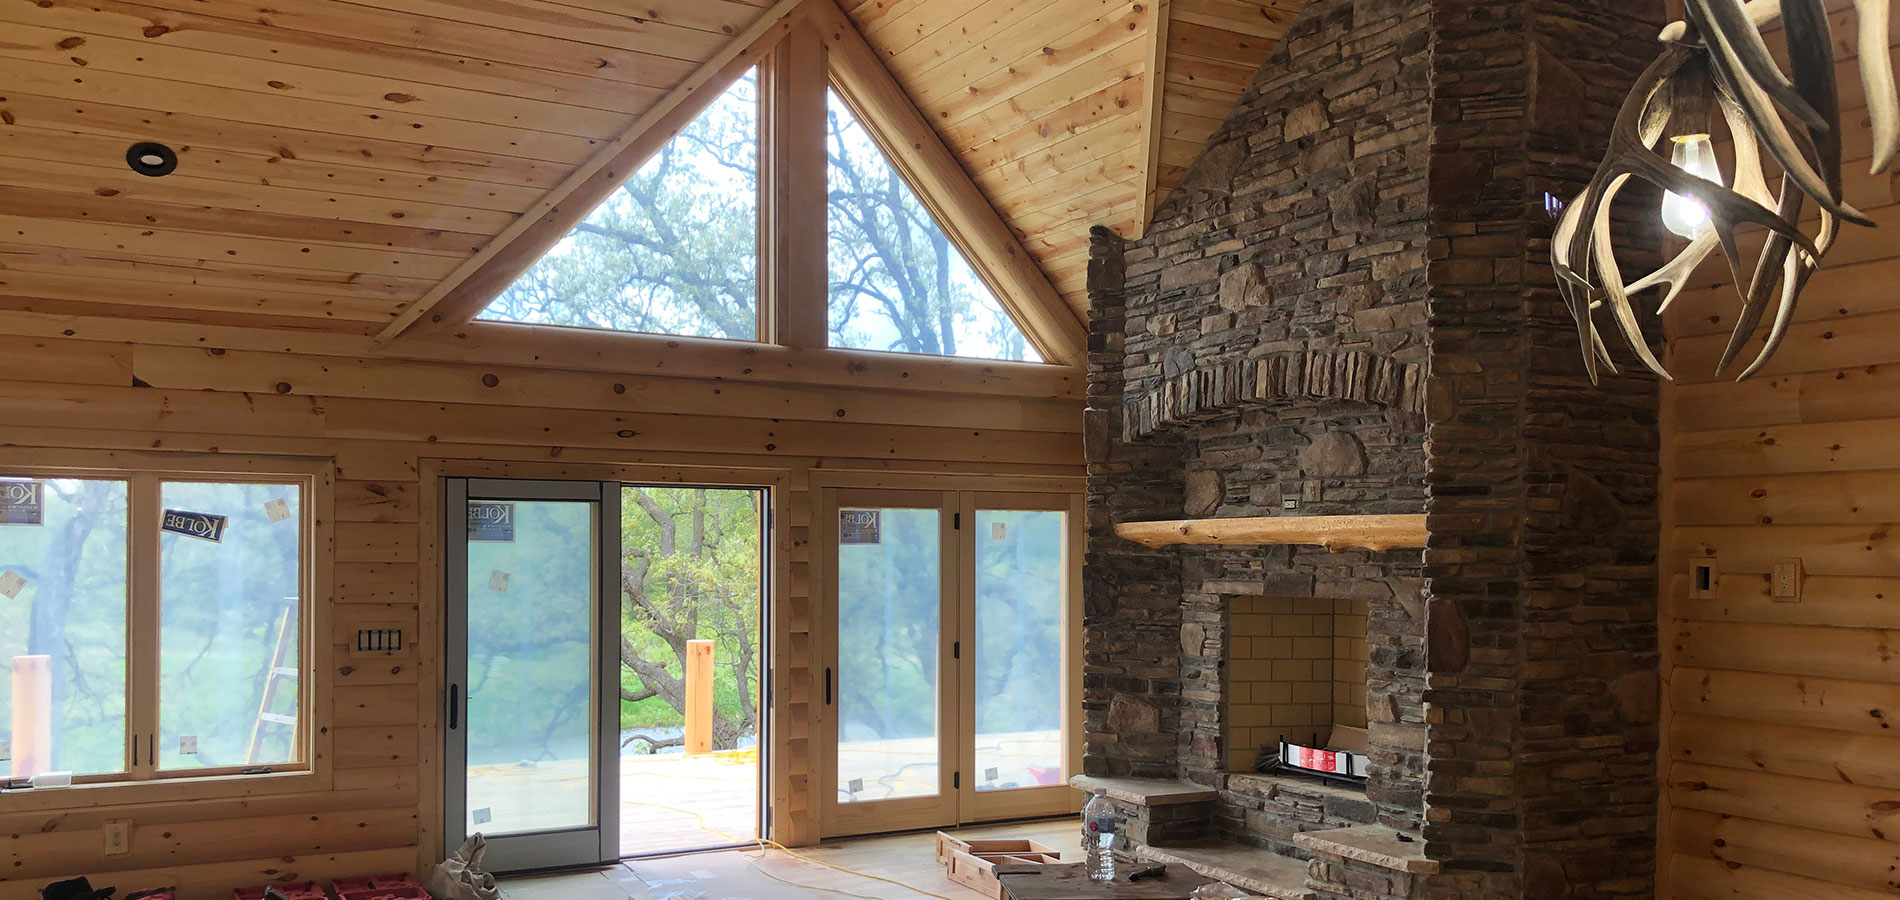 interior of a pole barn log-cabin style home